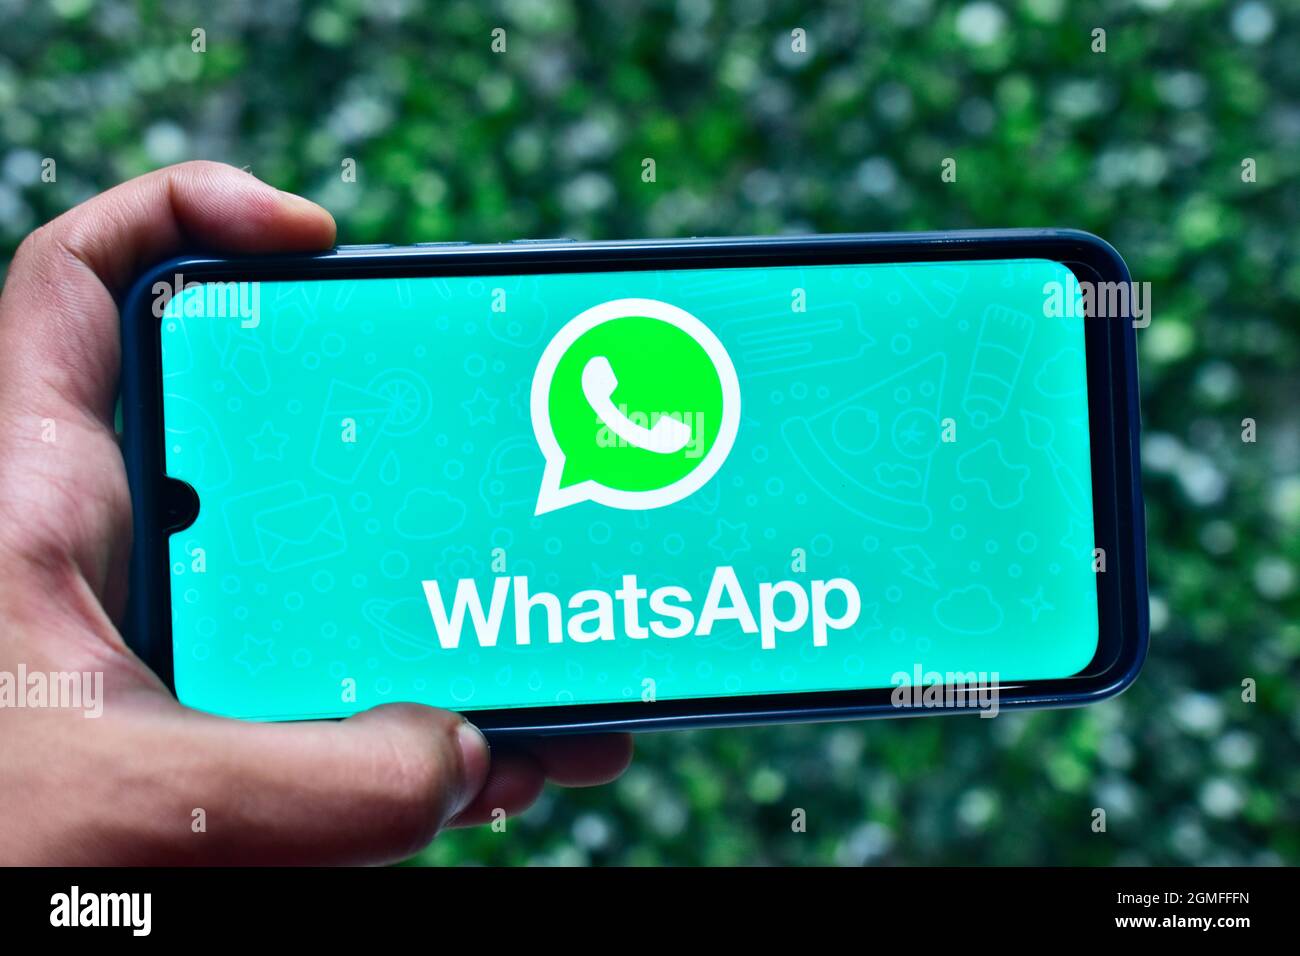 New Delhi, India - September 08, 2019: Hand holding smartphone with WhatsApp logo on screen Stock Photo